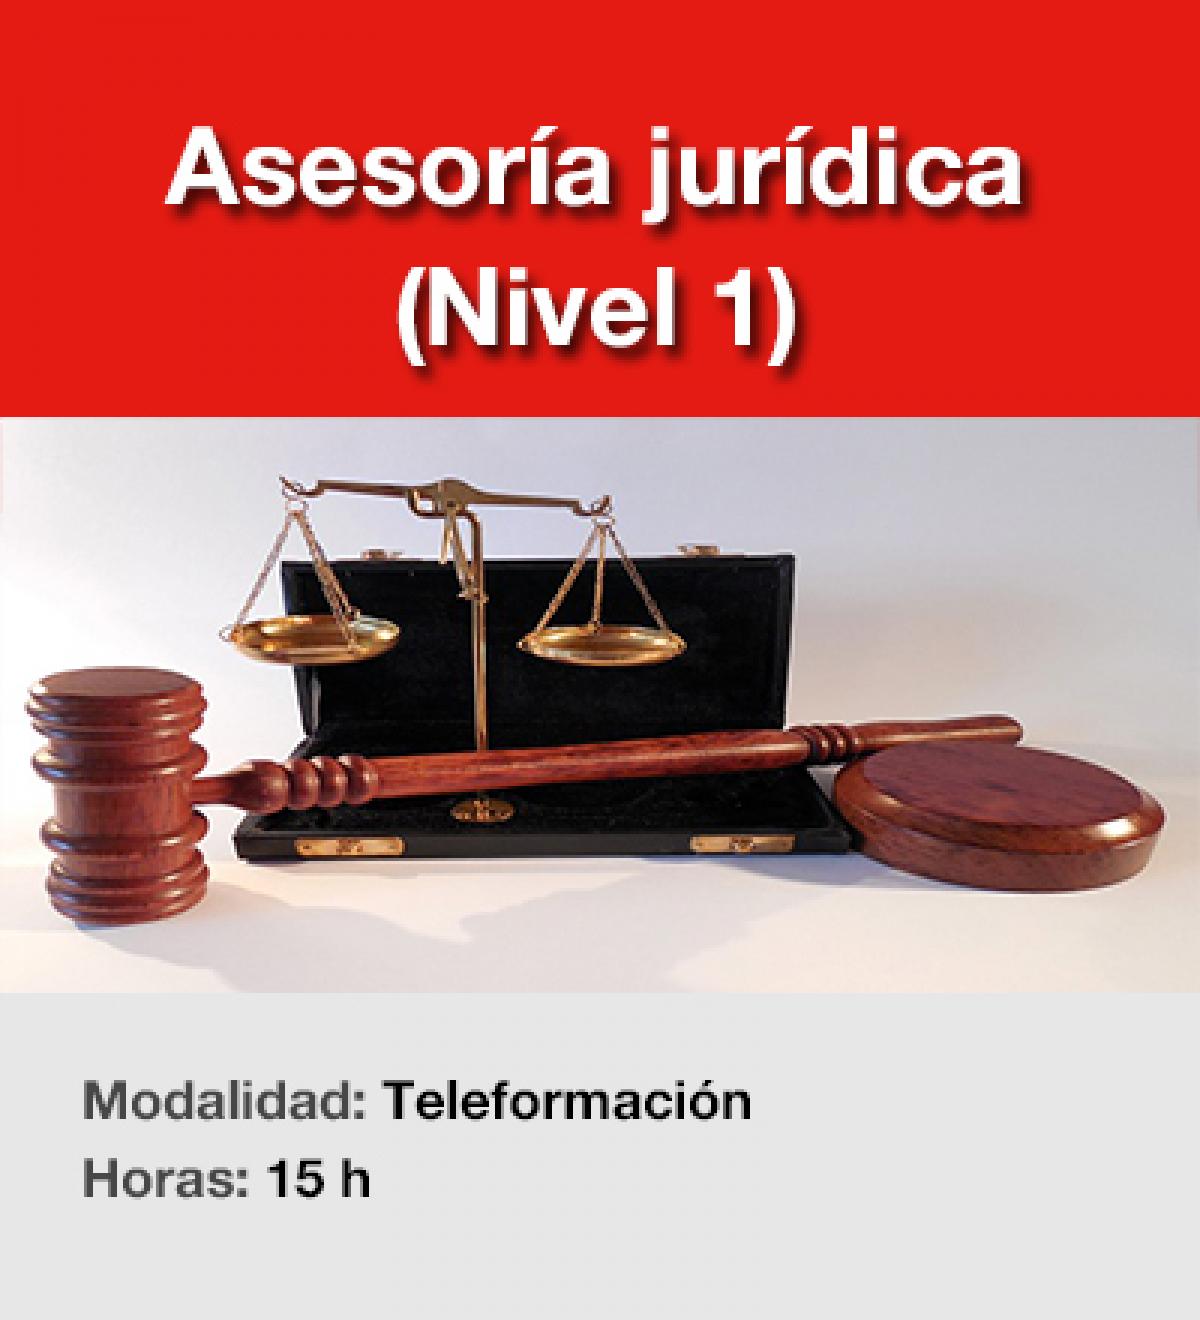 Asesora jurdica (Nivel 1)